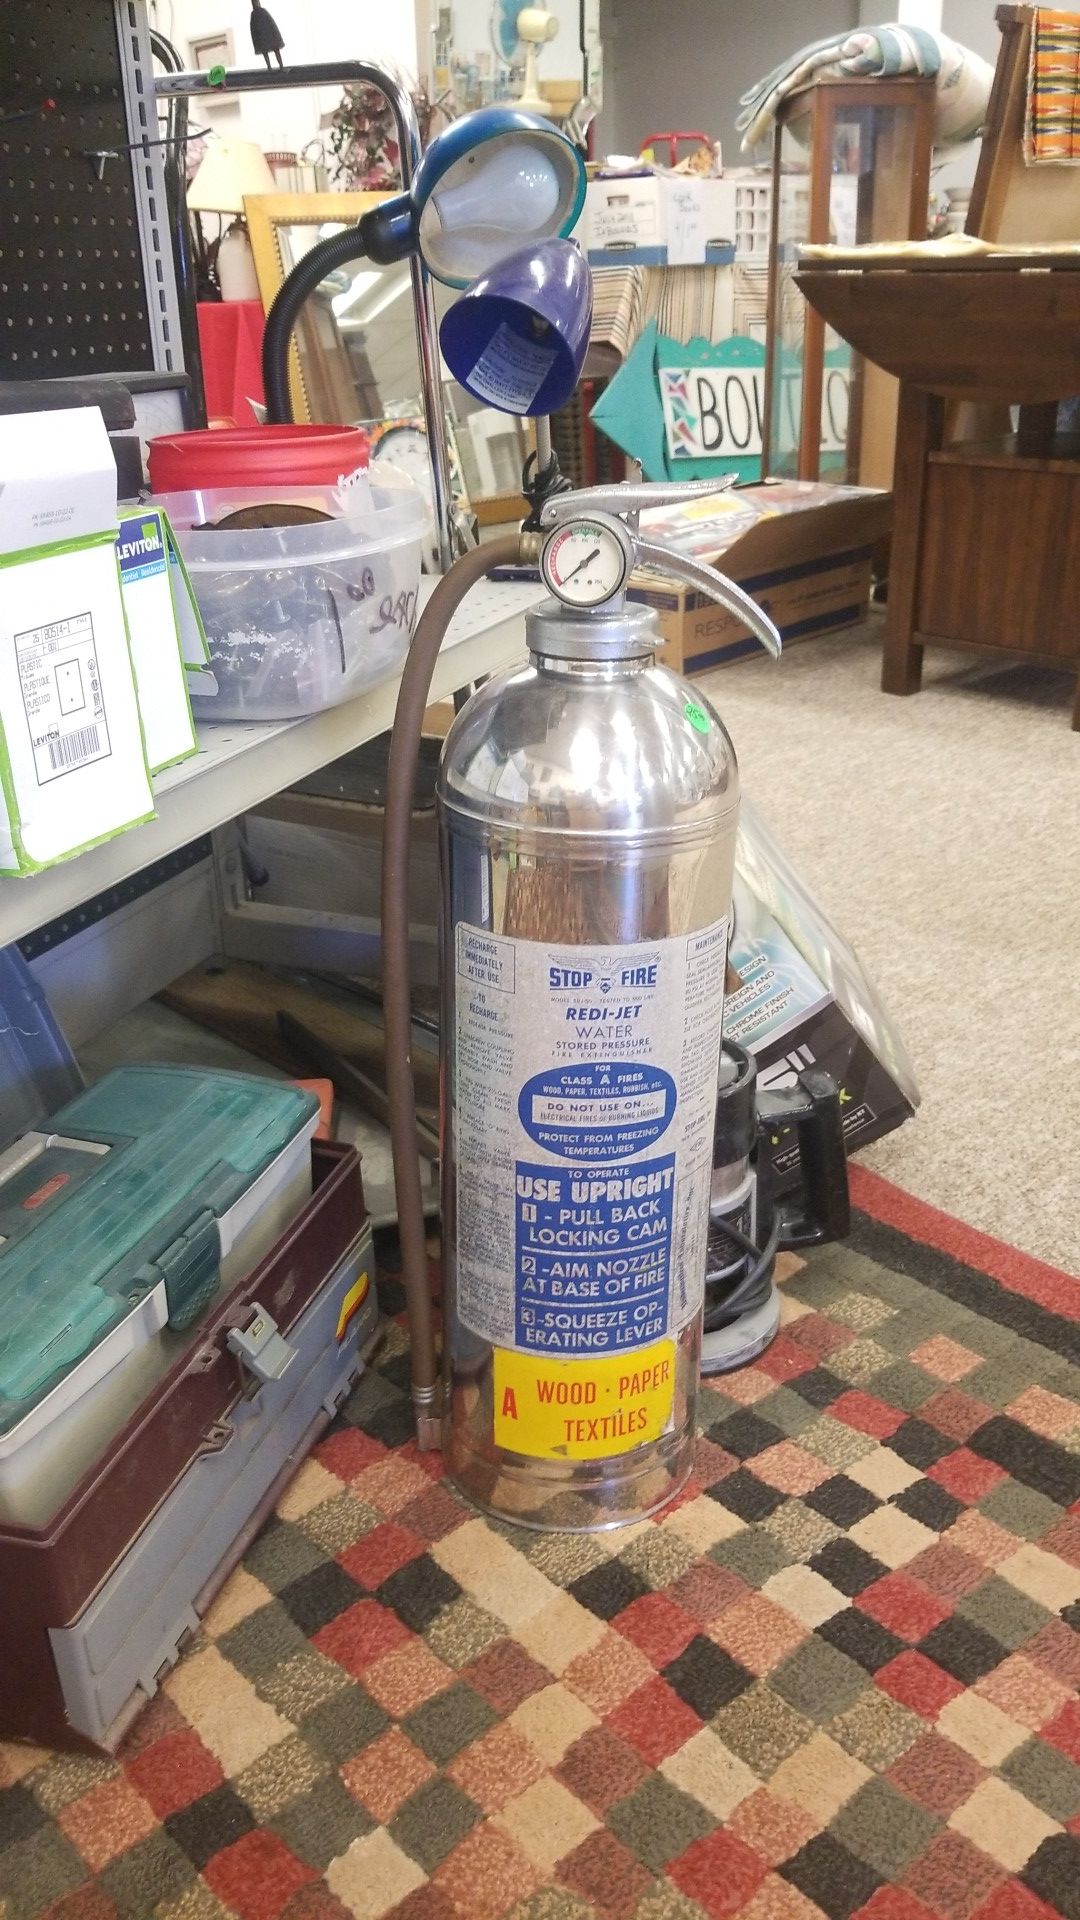 Water fire extinguisher